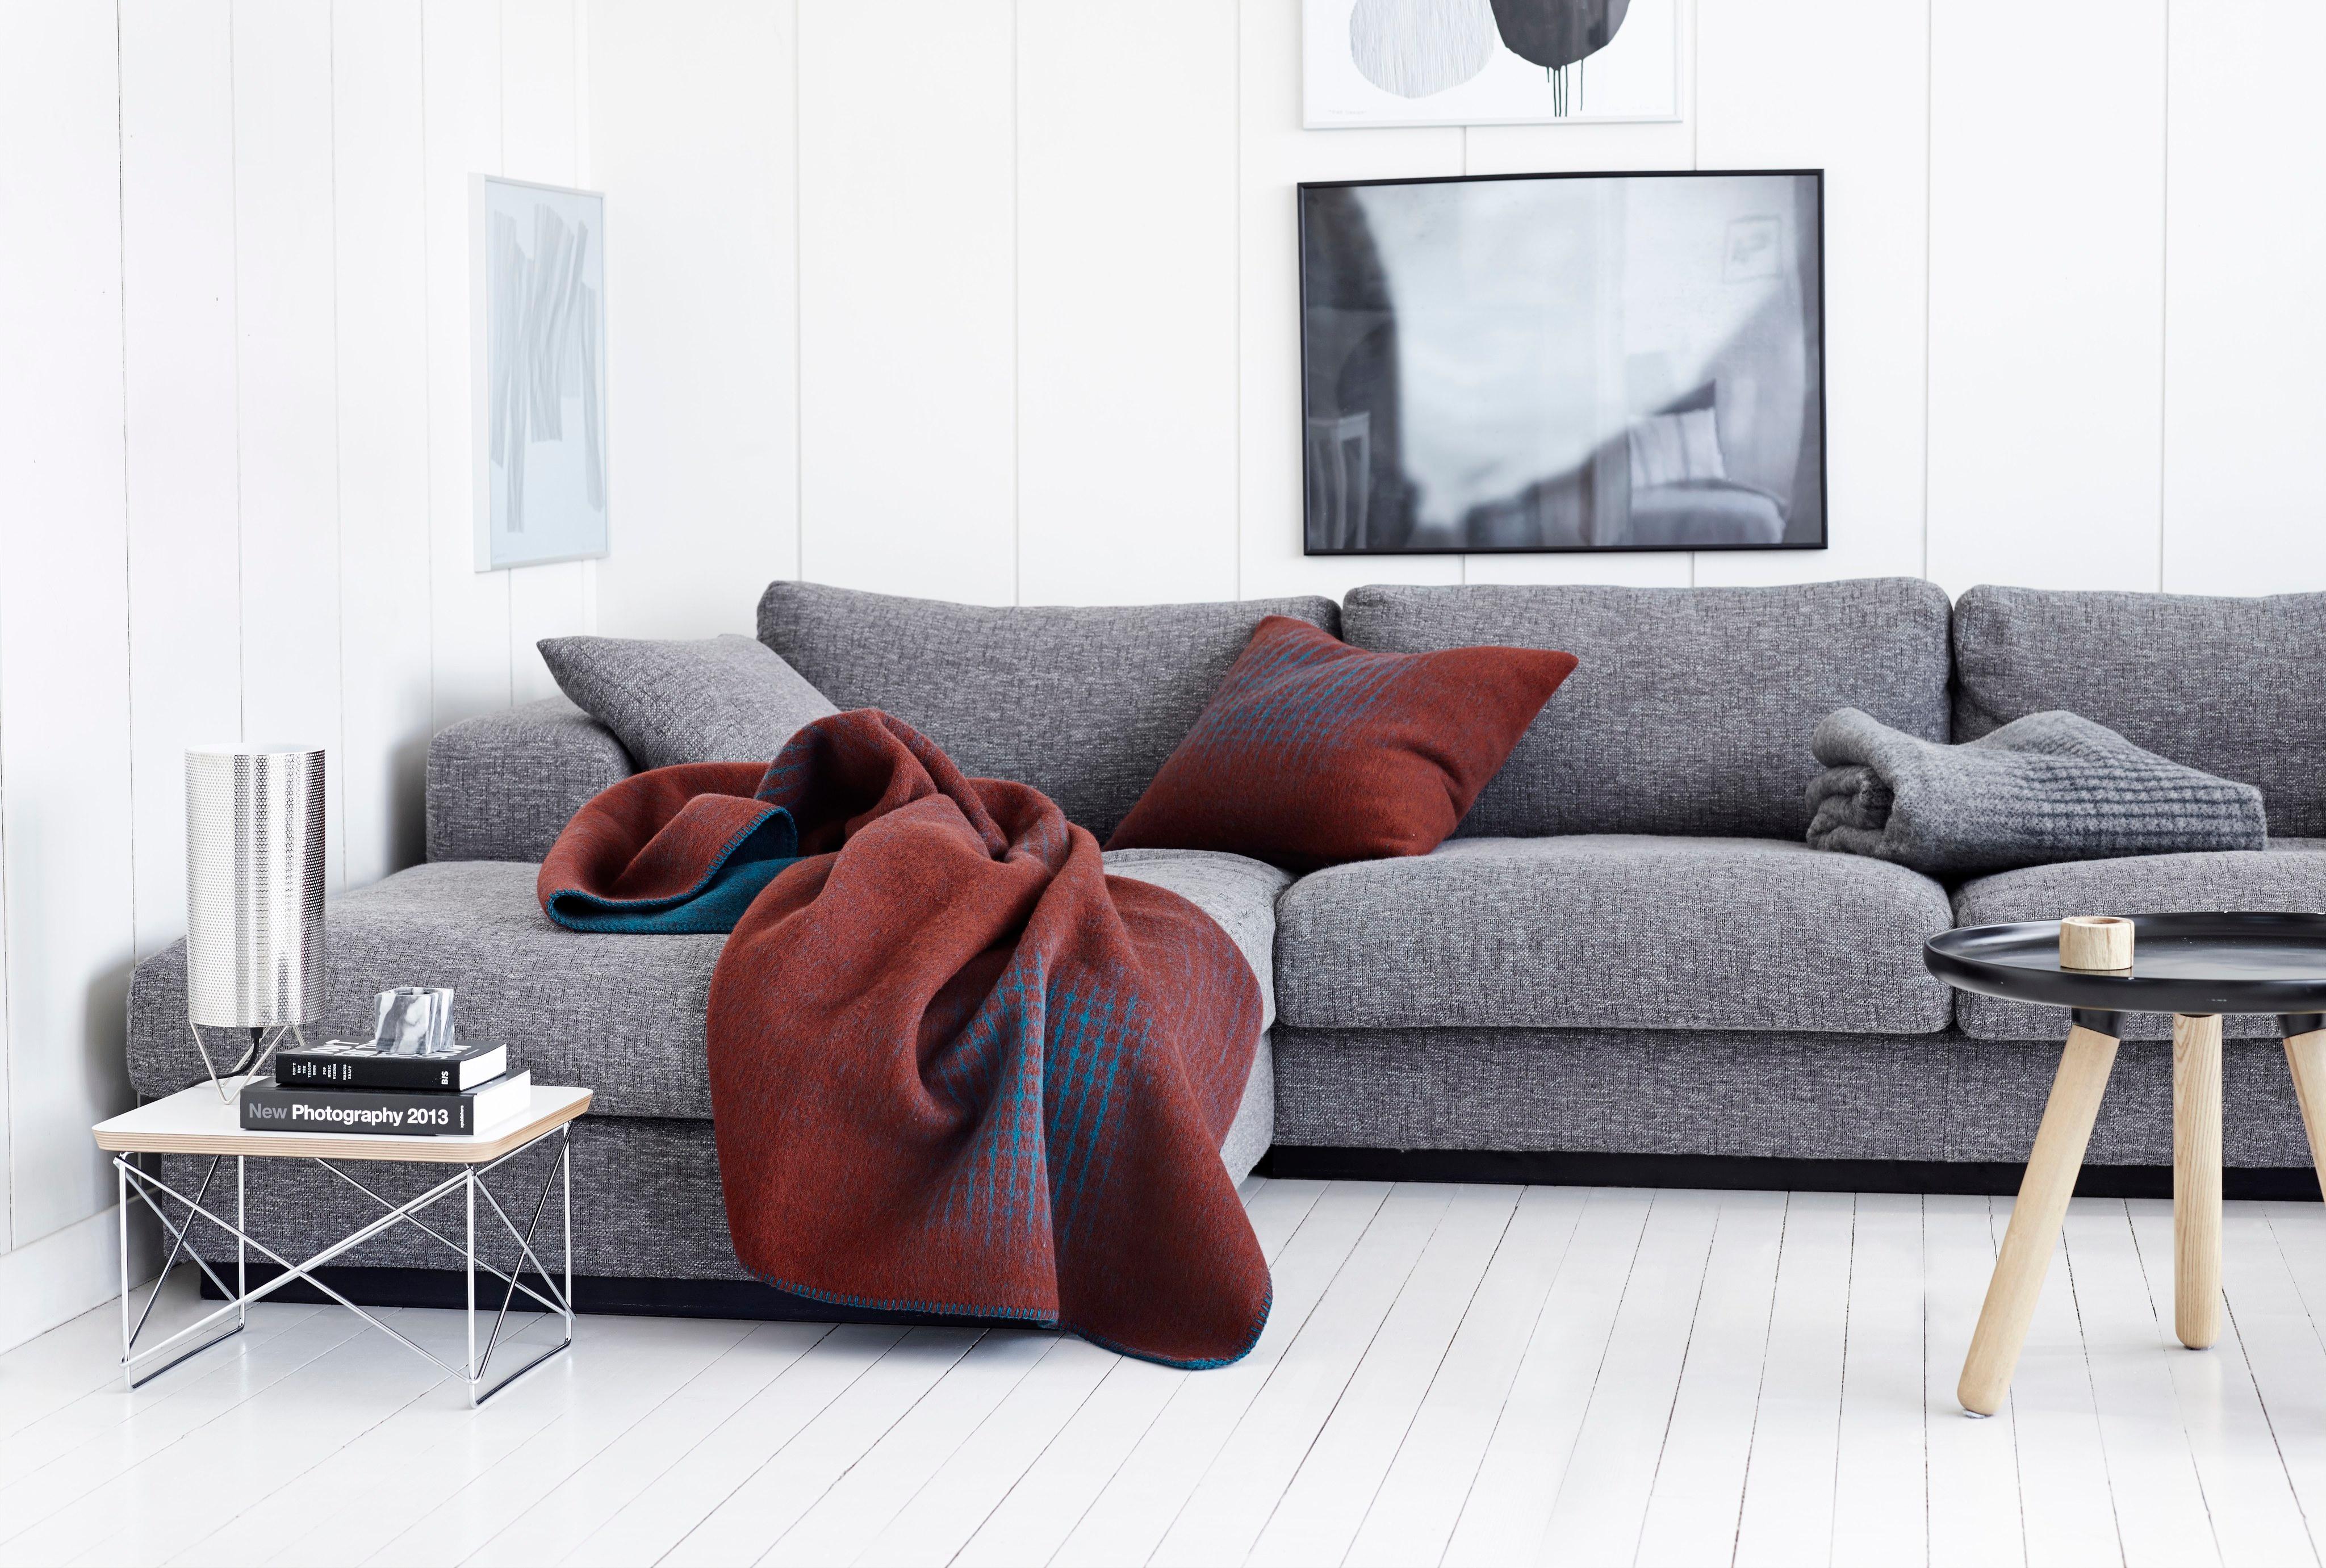 Røros Tweed Design Bernadette #skandinavischesdesign ©Røros Tweed AS